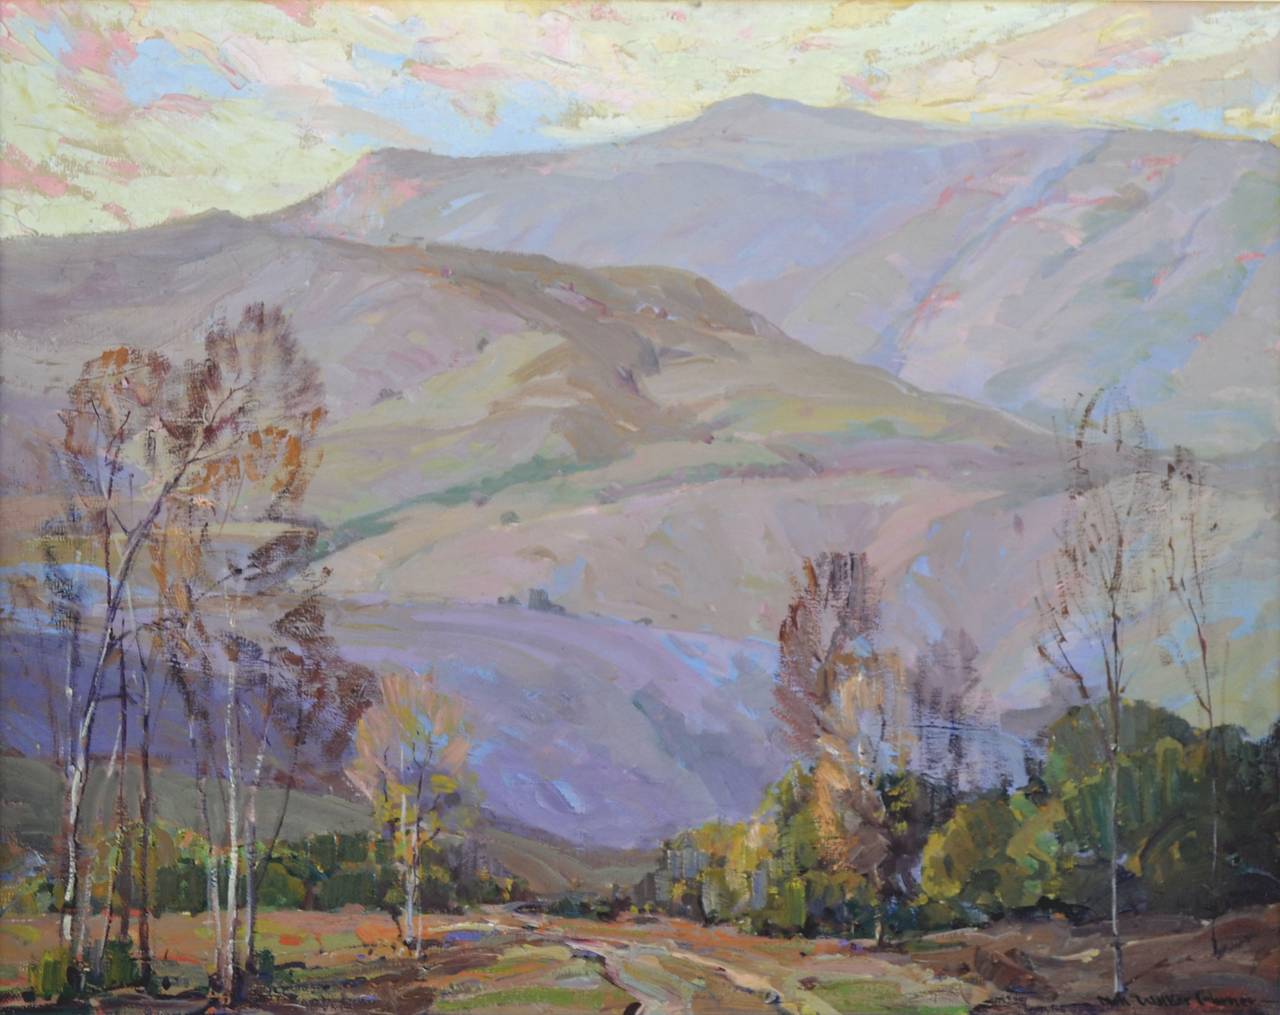 Santa Paula Mountains - Painting by Nell Walker Warner